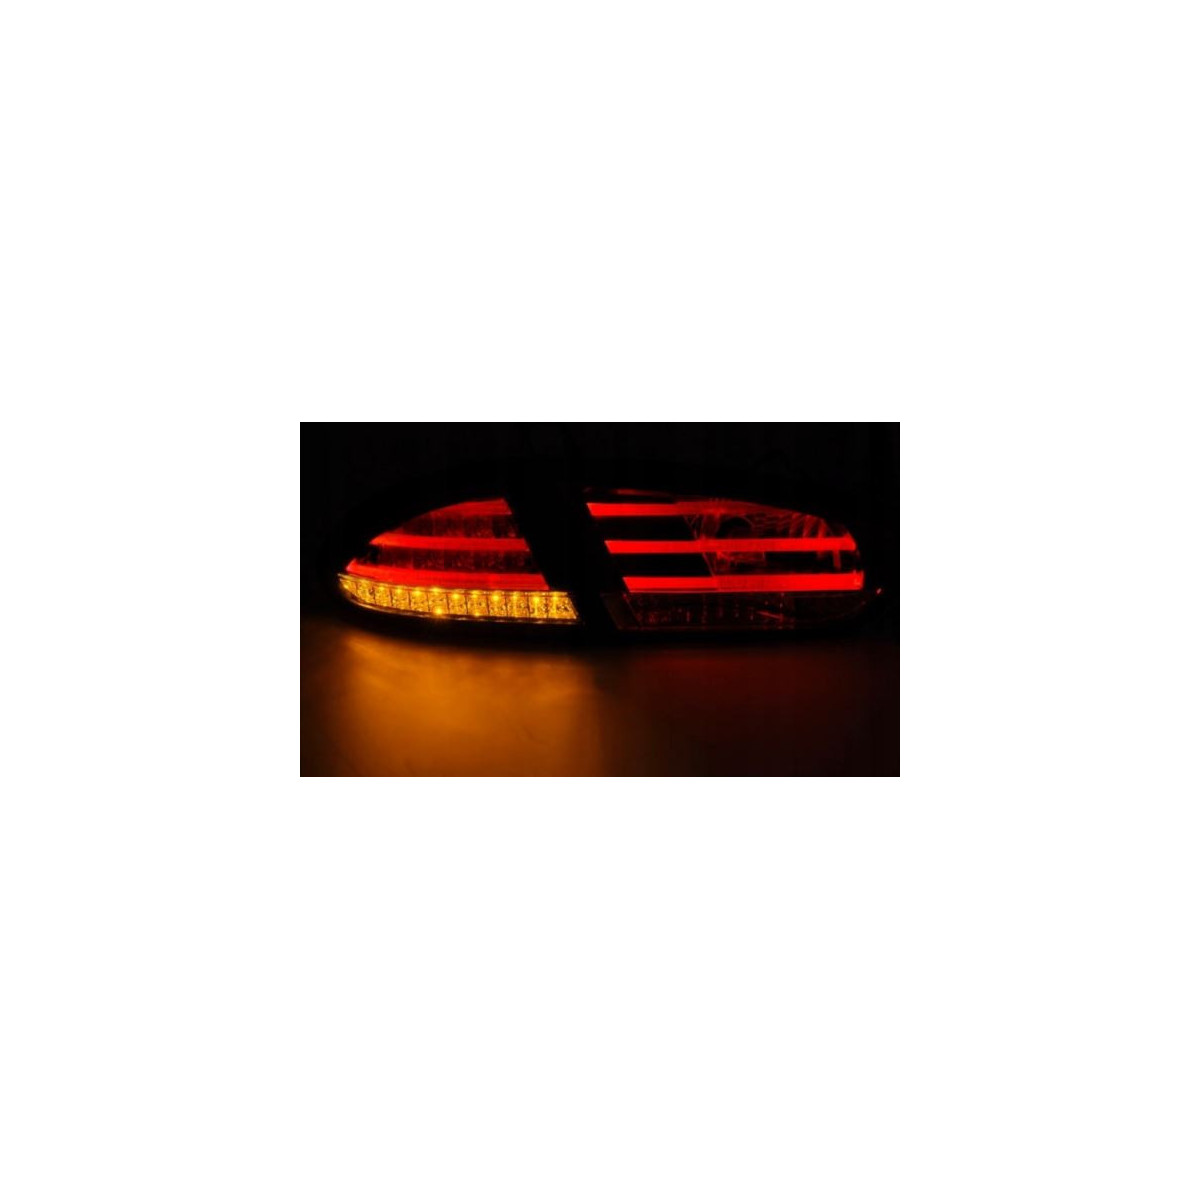 LAMPY SEAT LEON 03.09-13 RED SMOKE LED